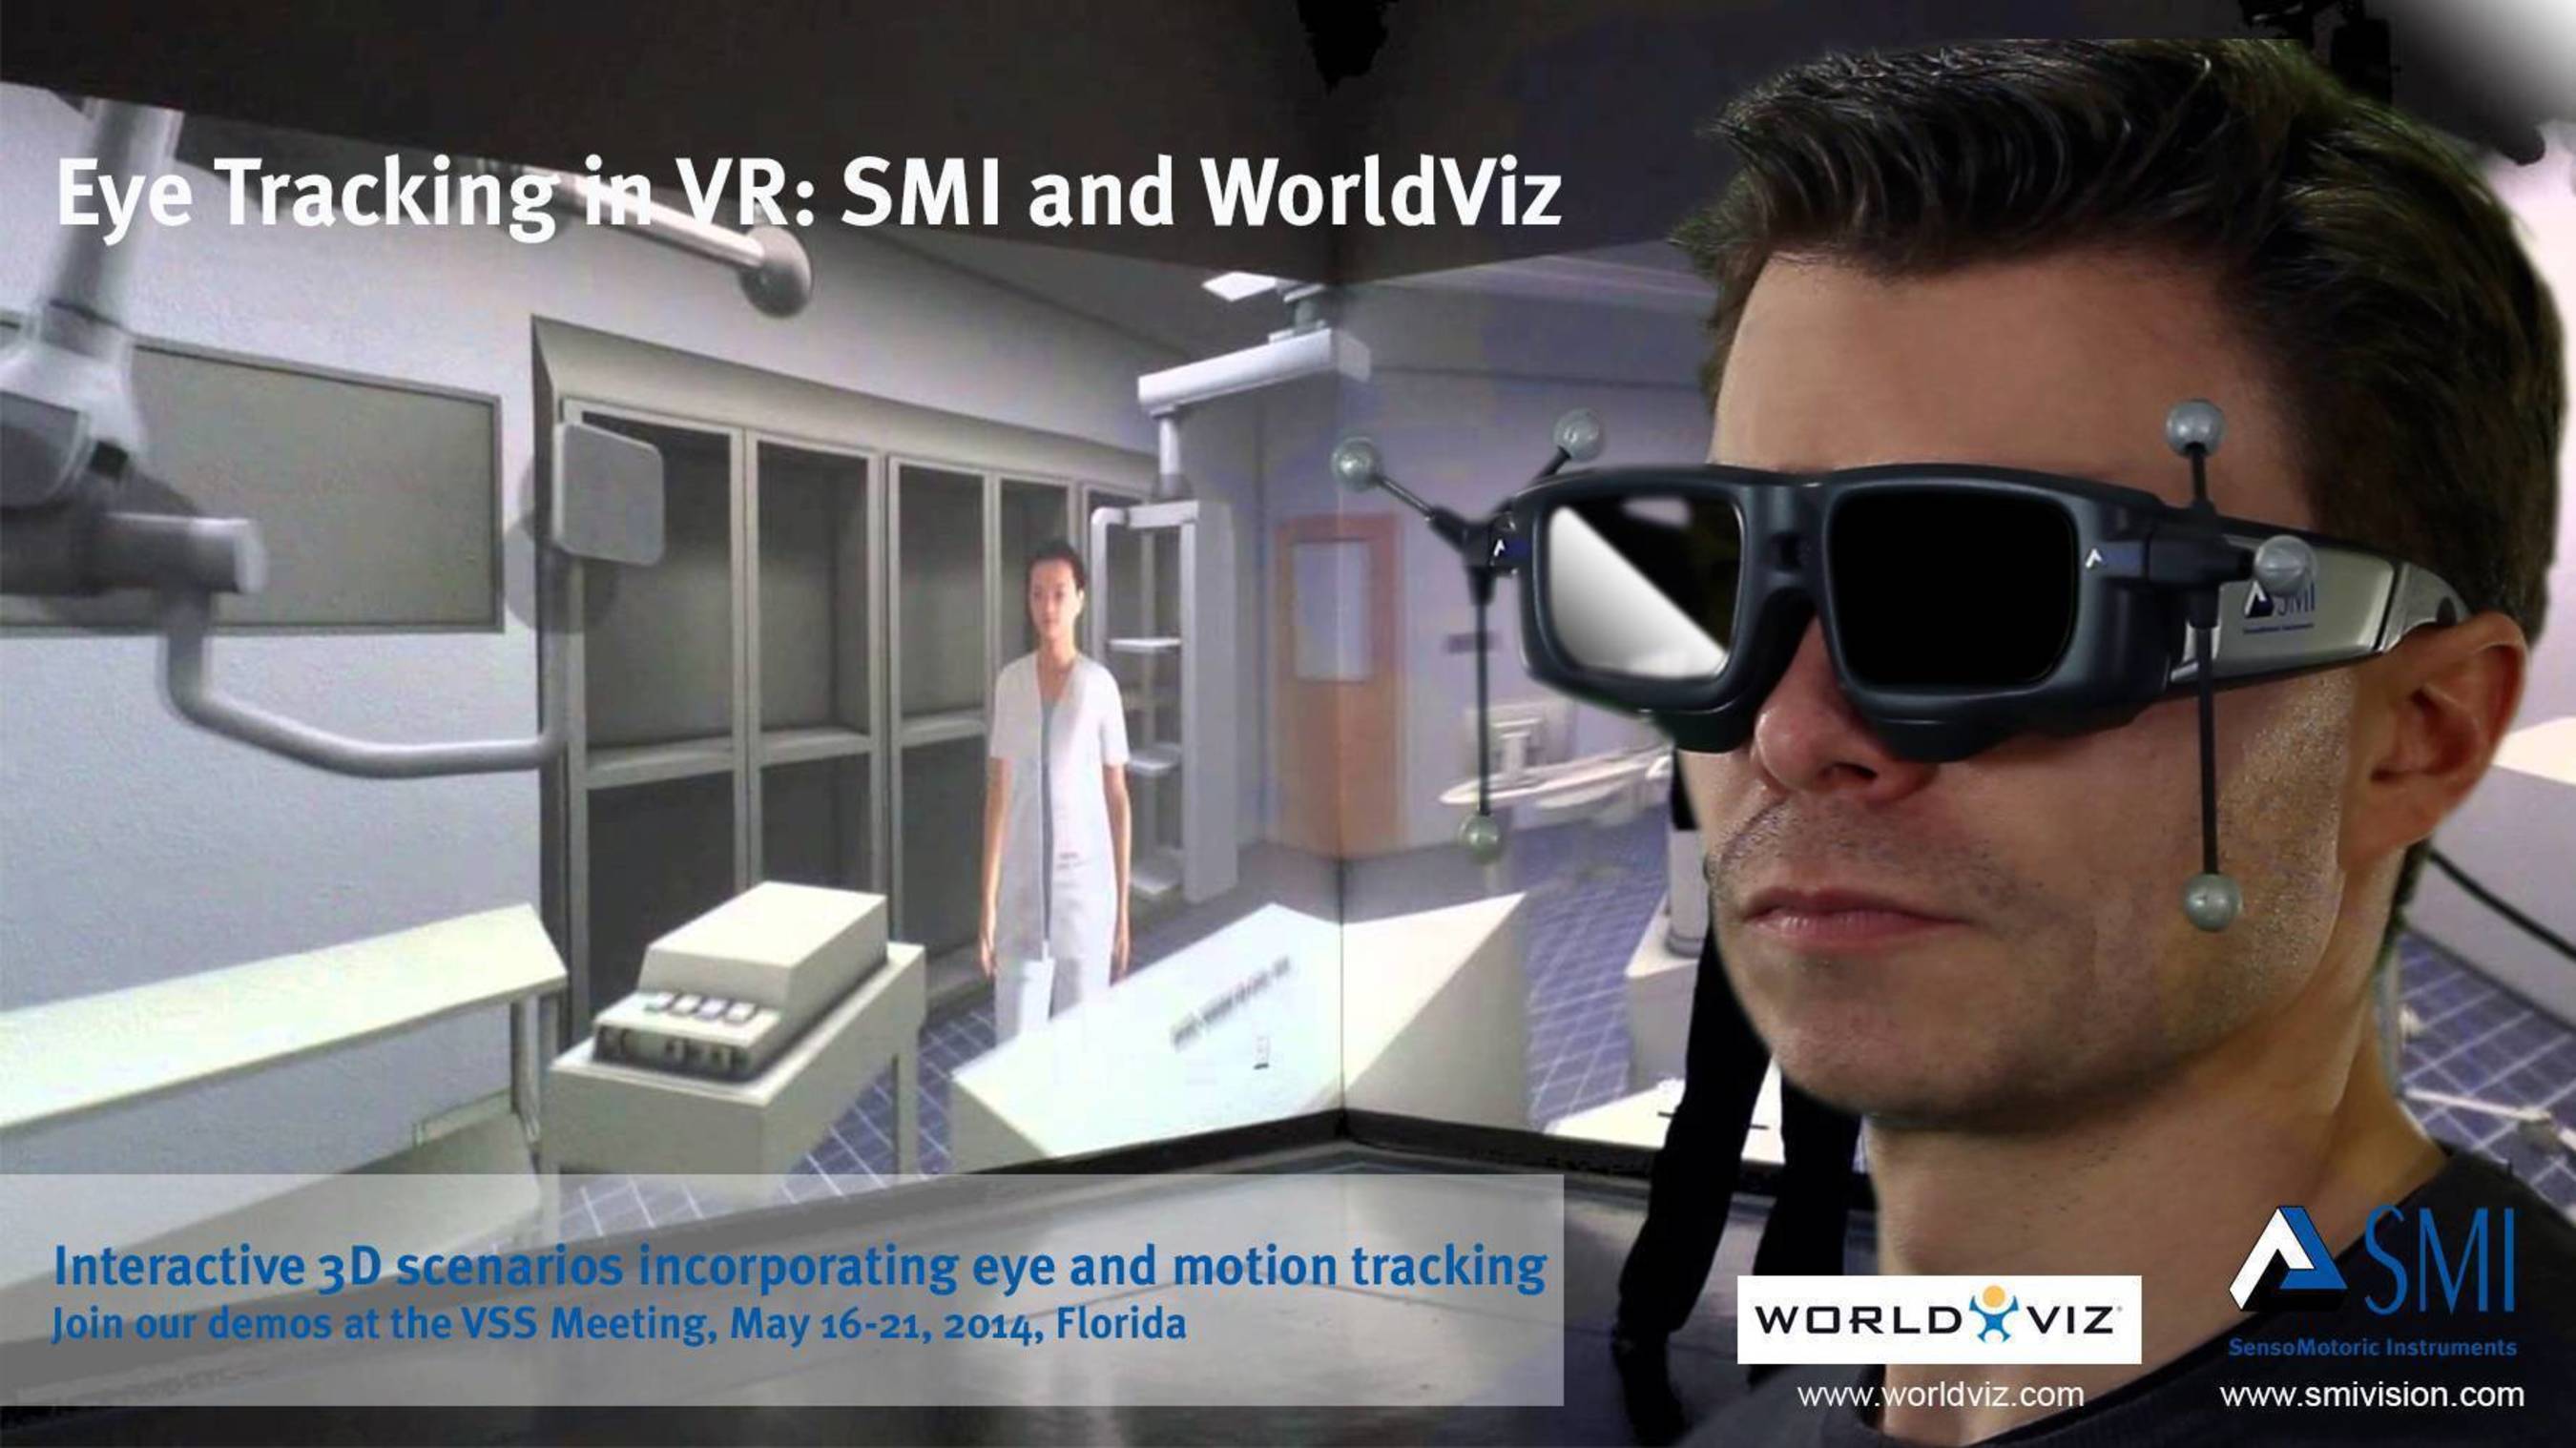 SMI and WorldViz bring eye tracking to virtual reality (PRNewsFoto/SensoMotoric Instruments GmbH)